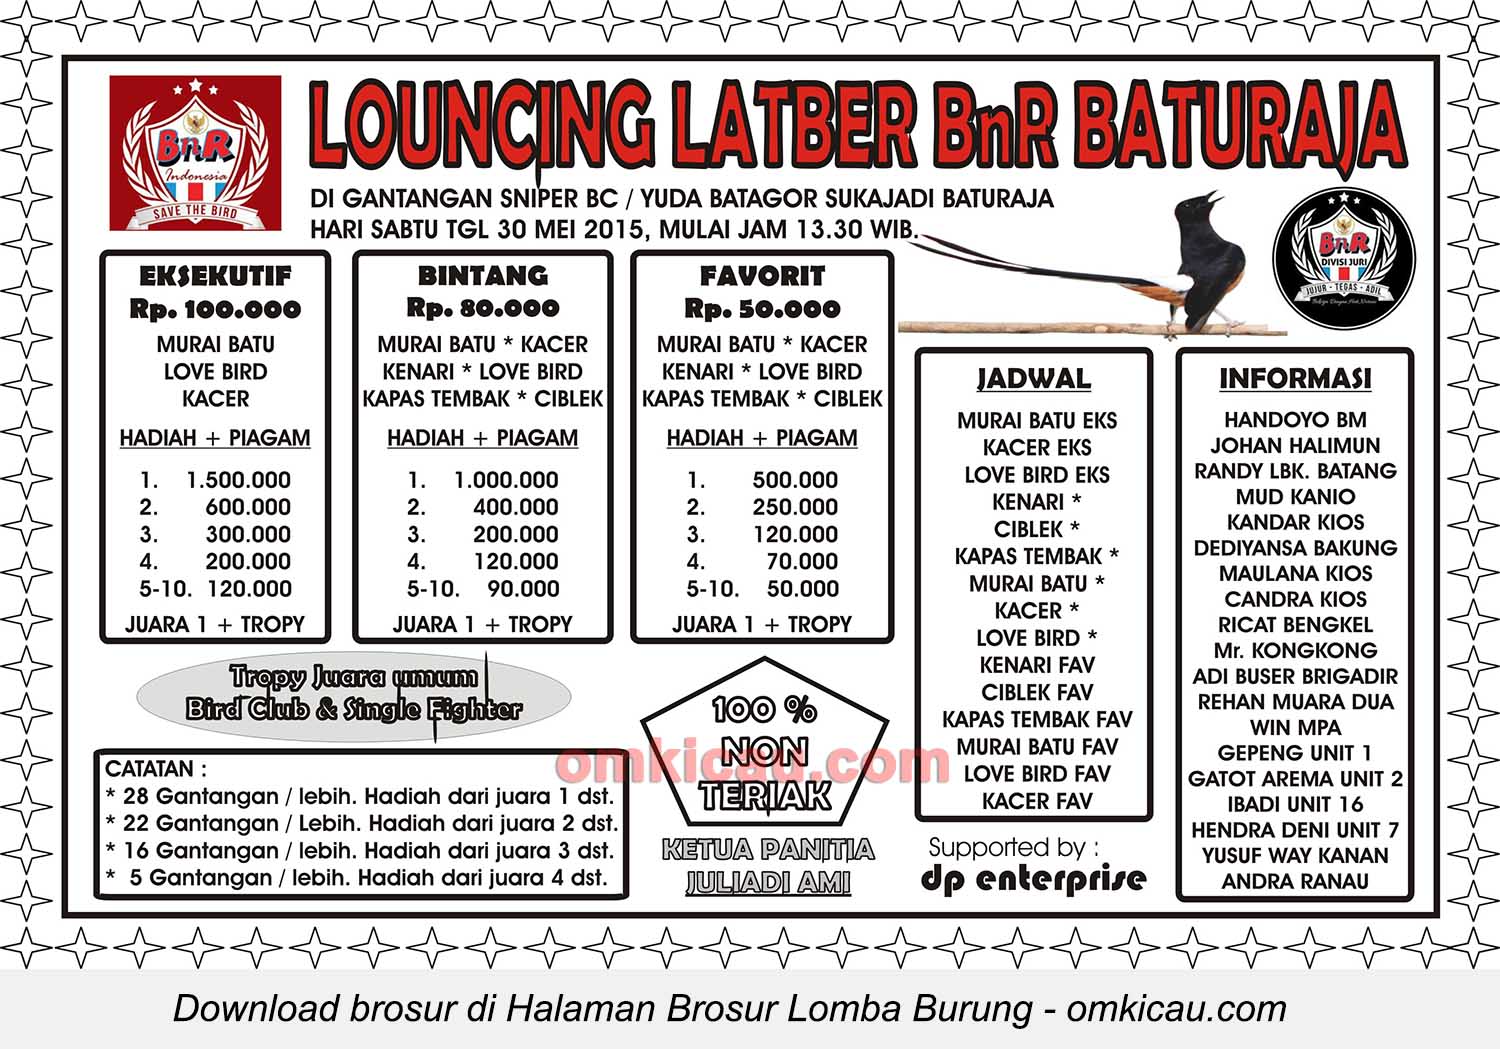 Brosur Latber Burung Berkicau Launching BnR Baturaja, 30 Mei 2015